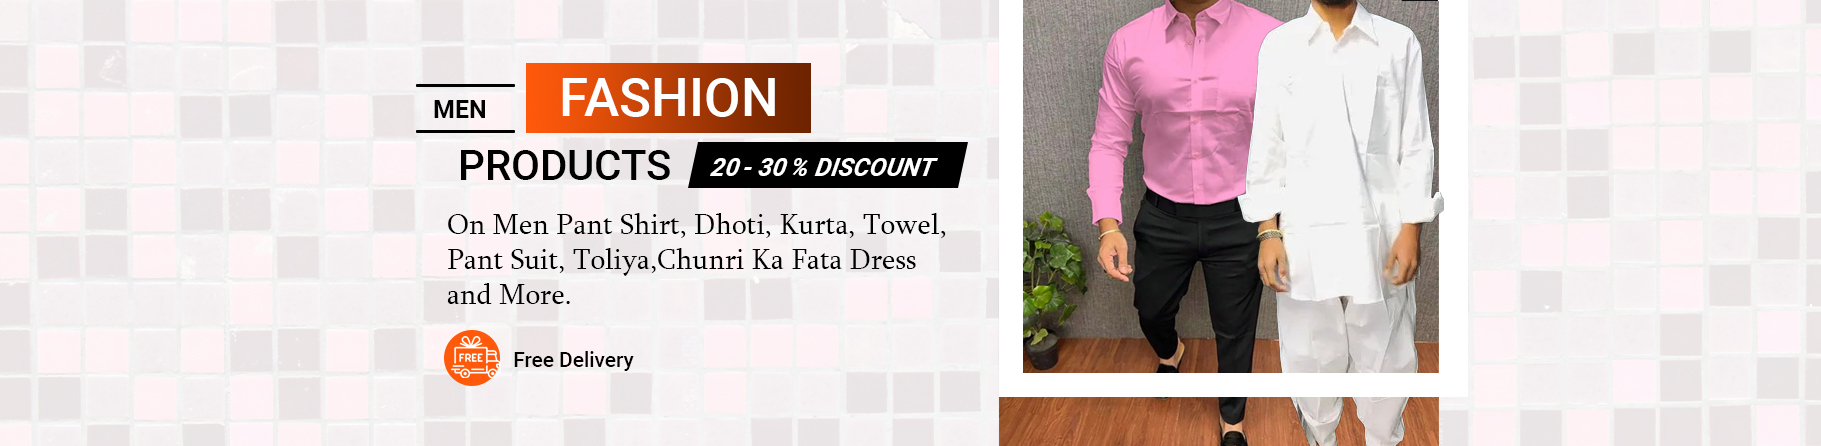 On Men Pant Shirt, Dhoti, Kurta, Towel, Pant Suit, Toliya,Chunri Ka Fata Dress and More.